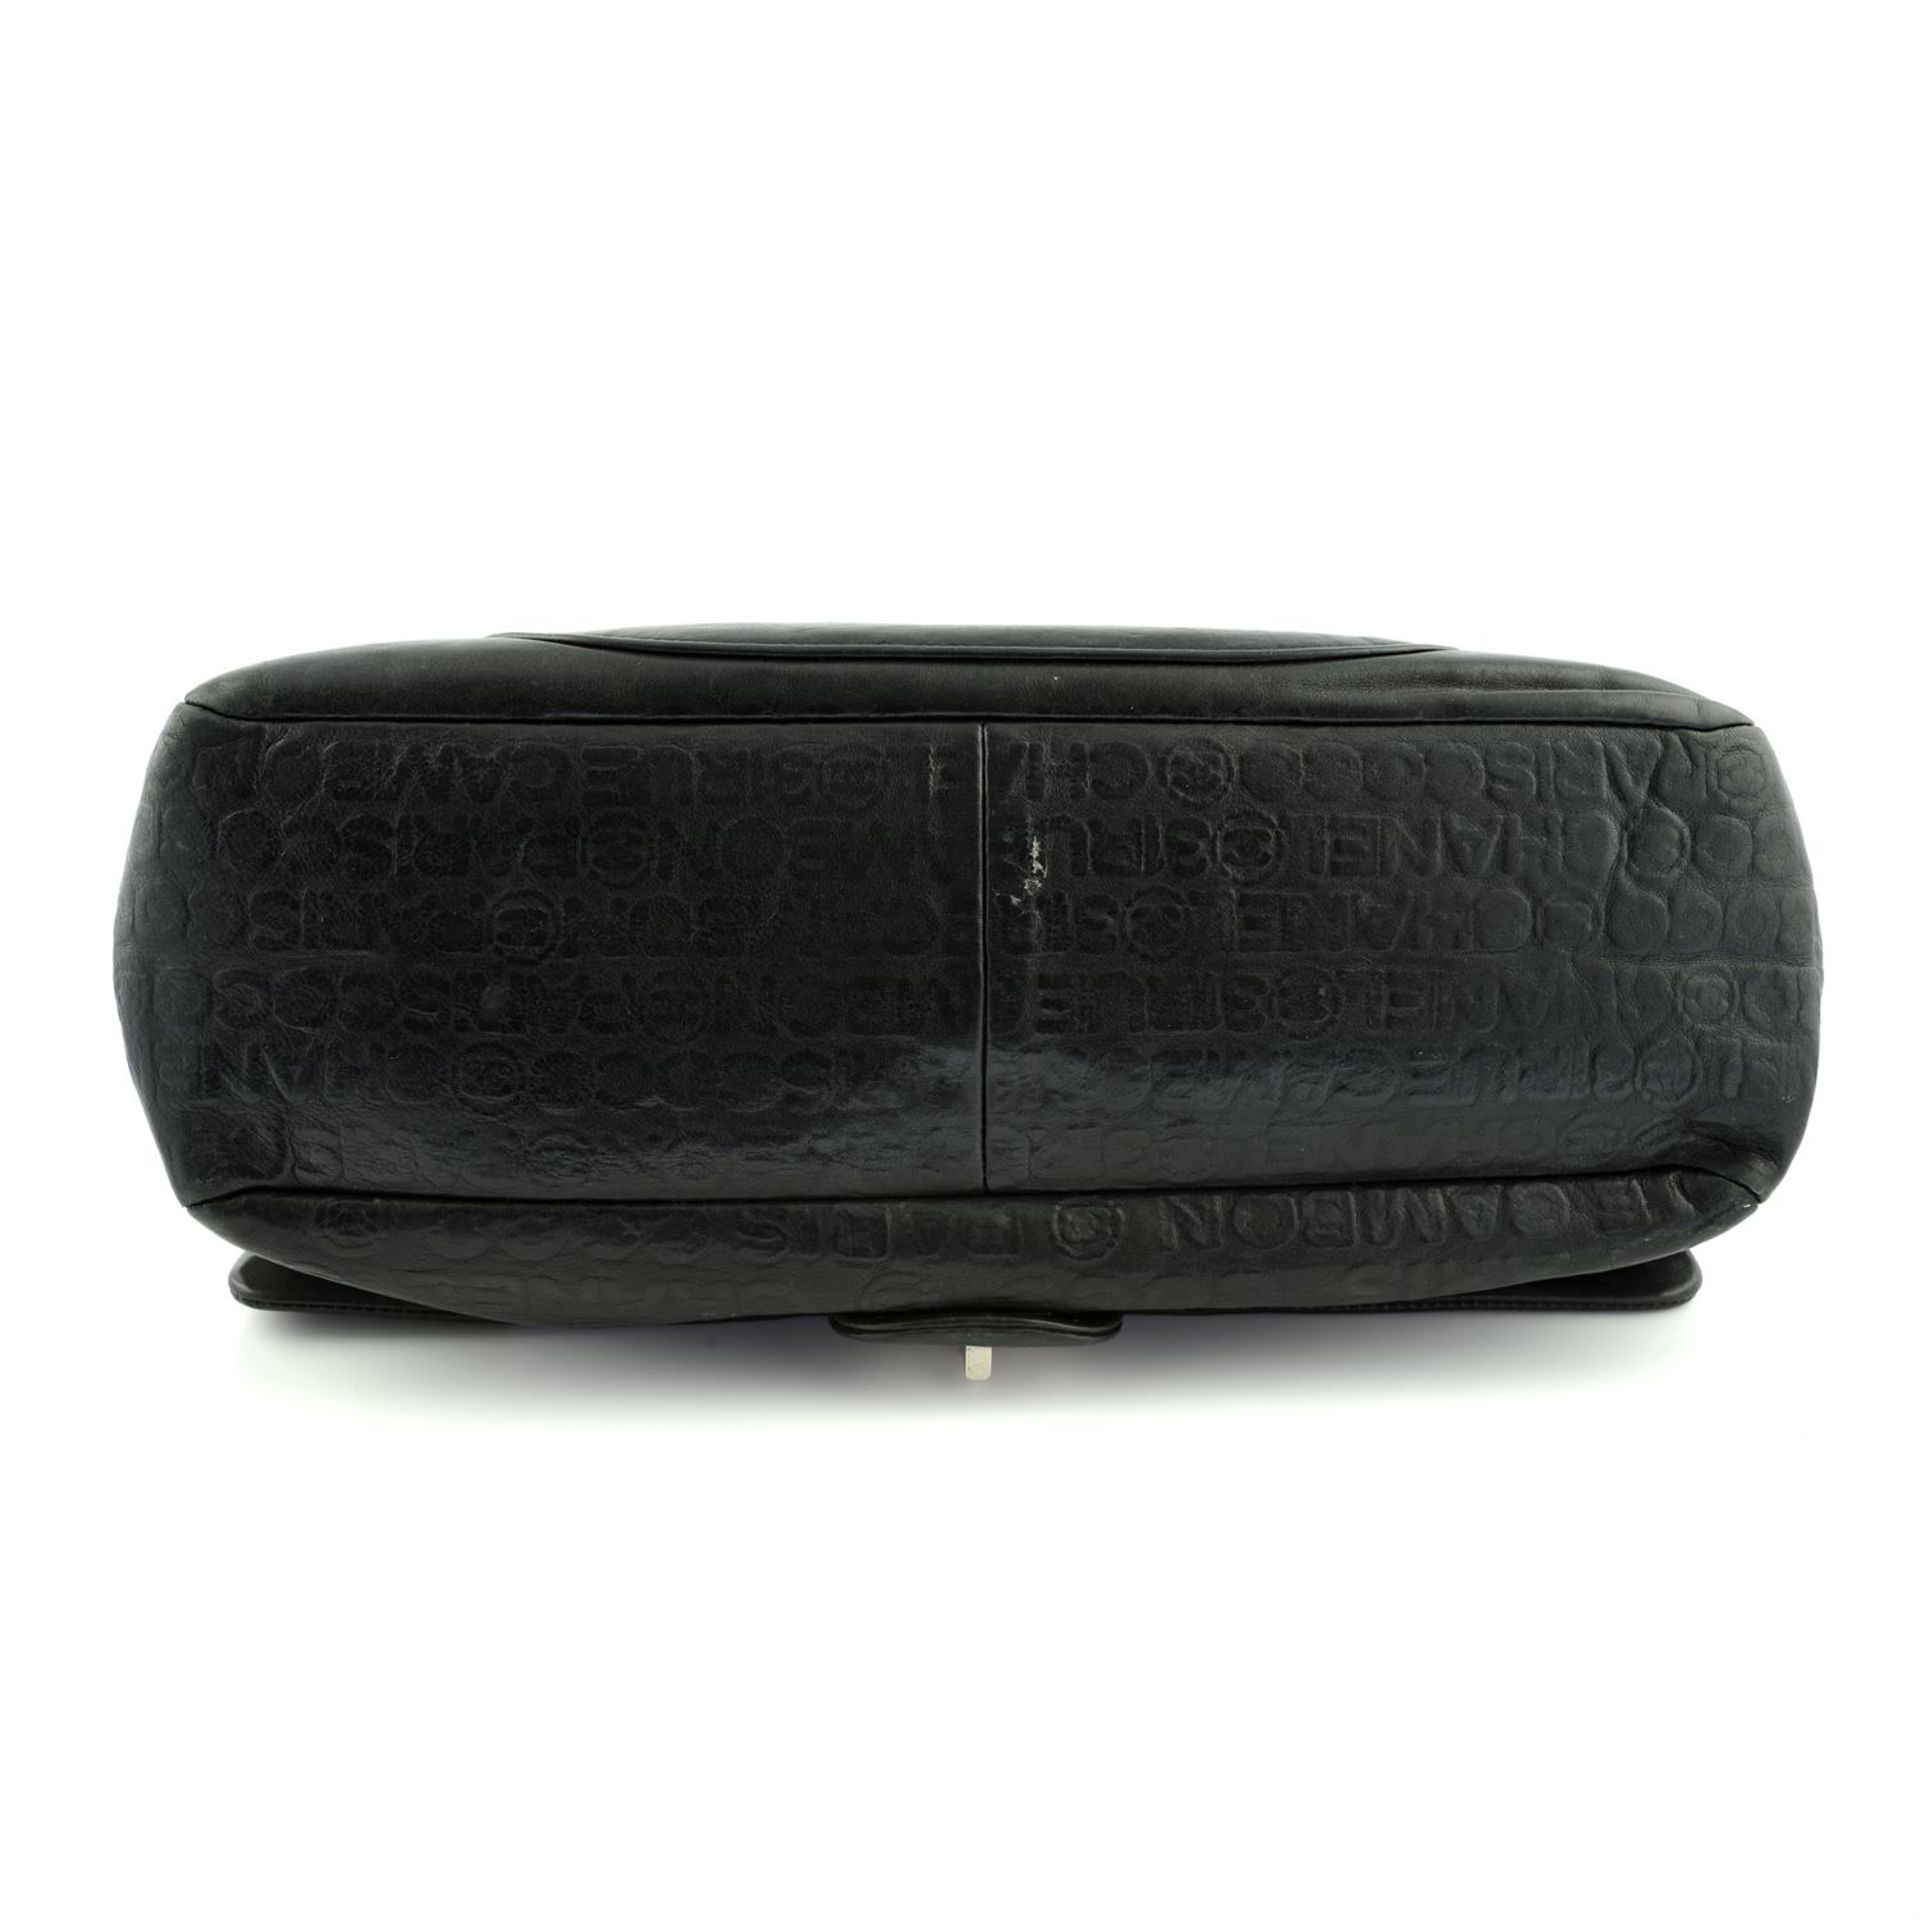 CHANEL - a black lambskin "31 Rue Cambon Paris" Reissue 2.55 double flap handbag. - Image 4 of 5